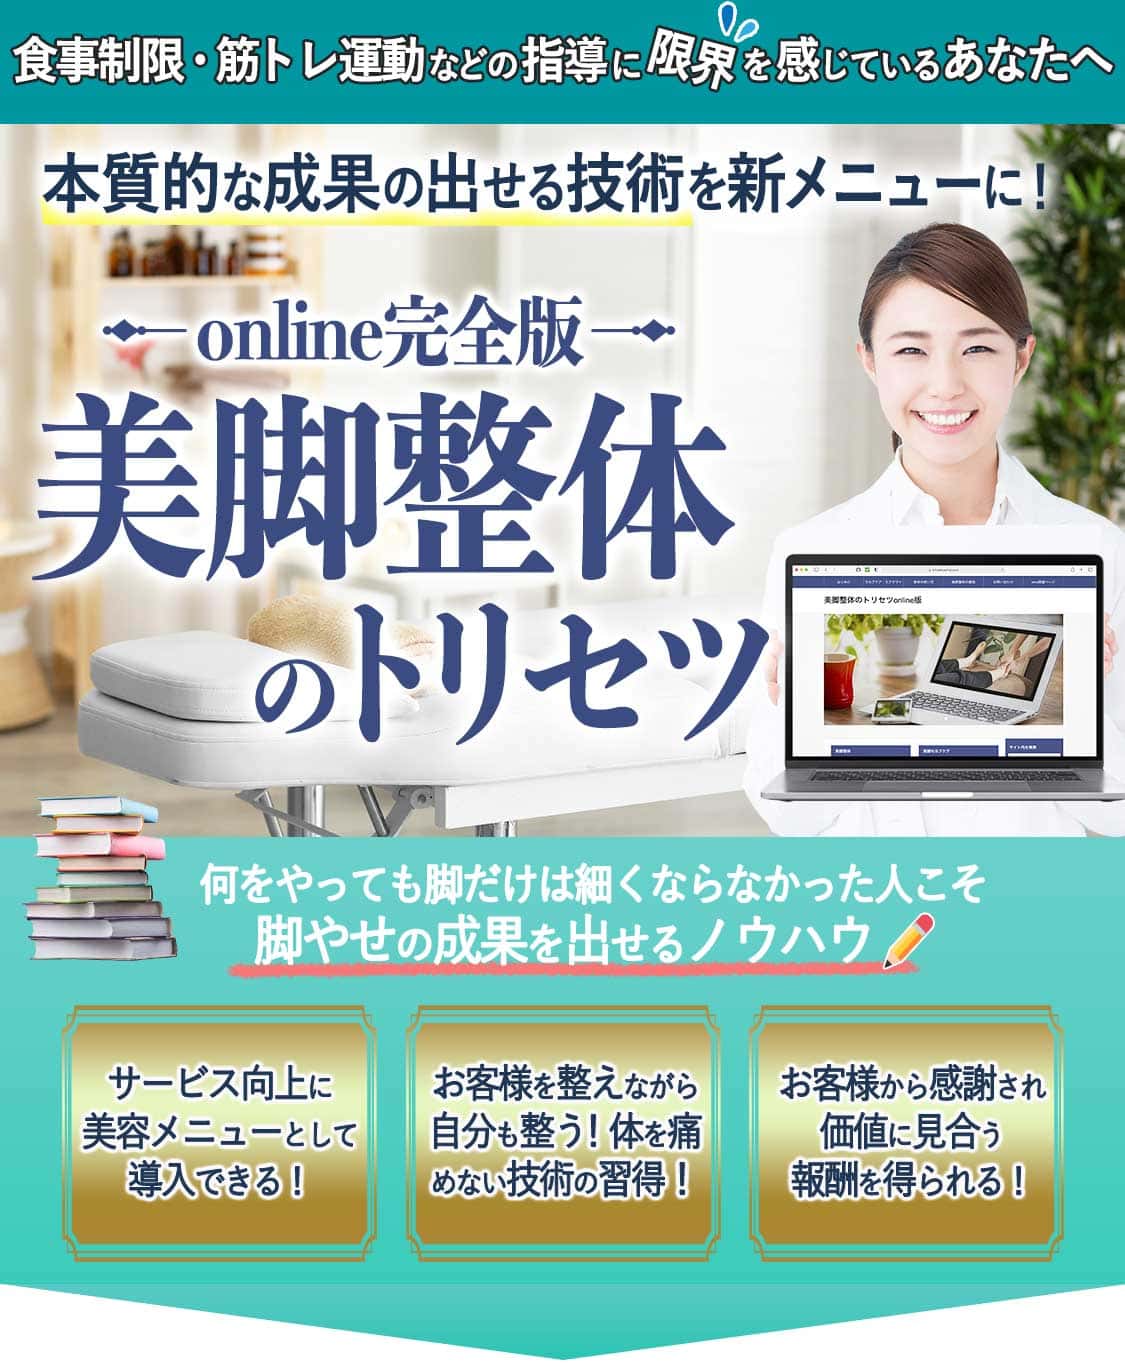 onlinecourse-osteopathy,bikyakuseitai-studio-amo,美脚整体スタジオamo,青木正儀のオンラインコース,美脚整体のトリセツ